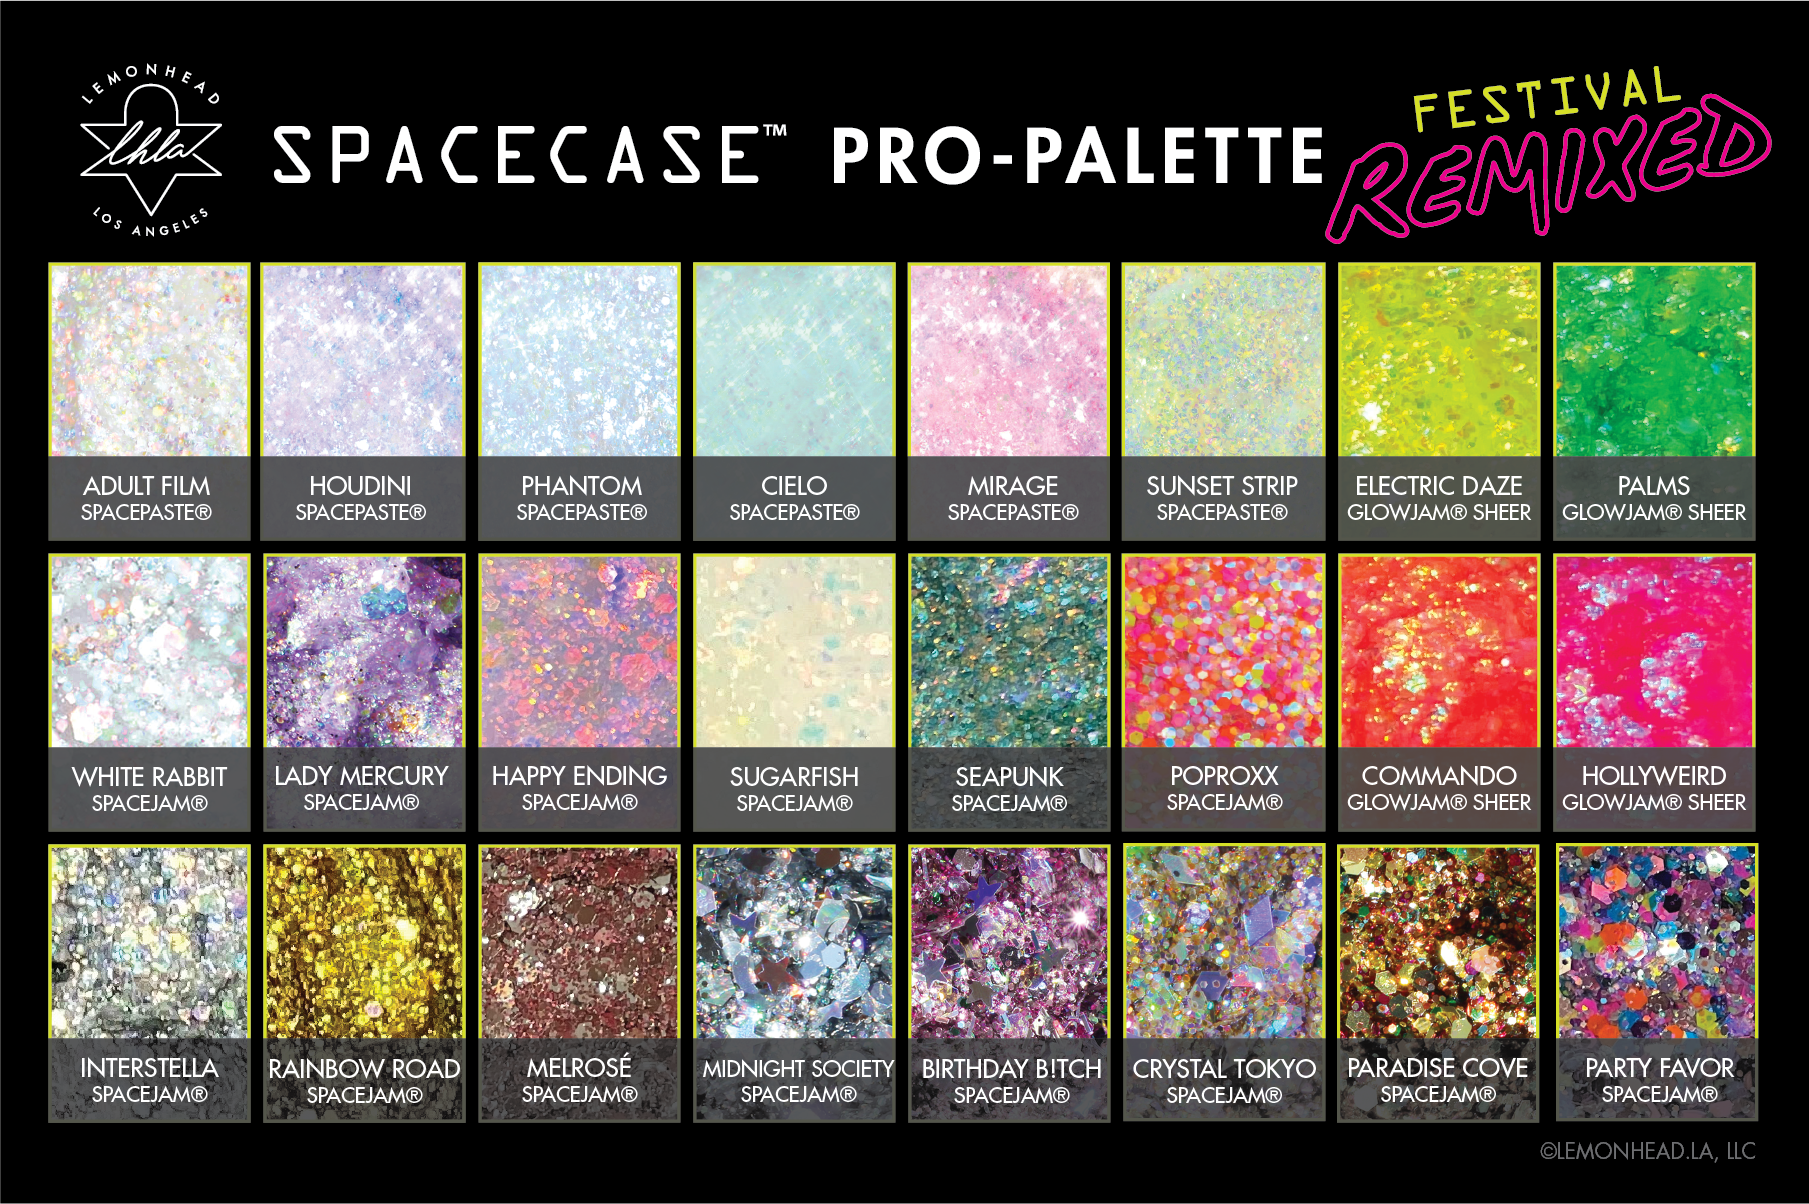 SPACECASE PRO-Palette Remixed - Festival Edit